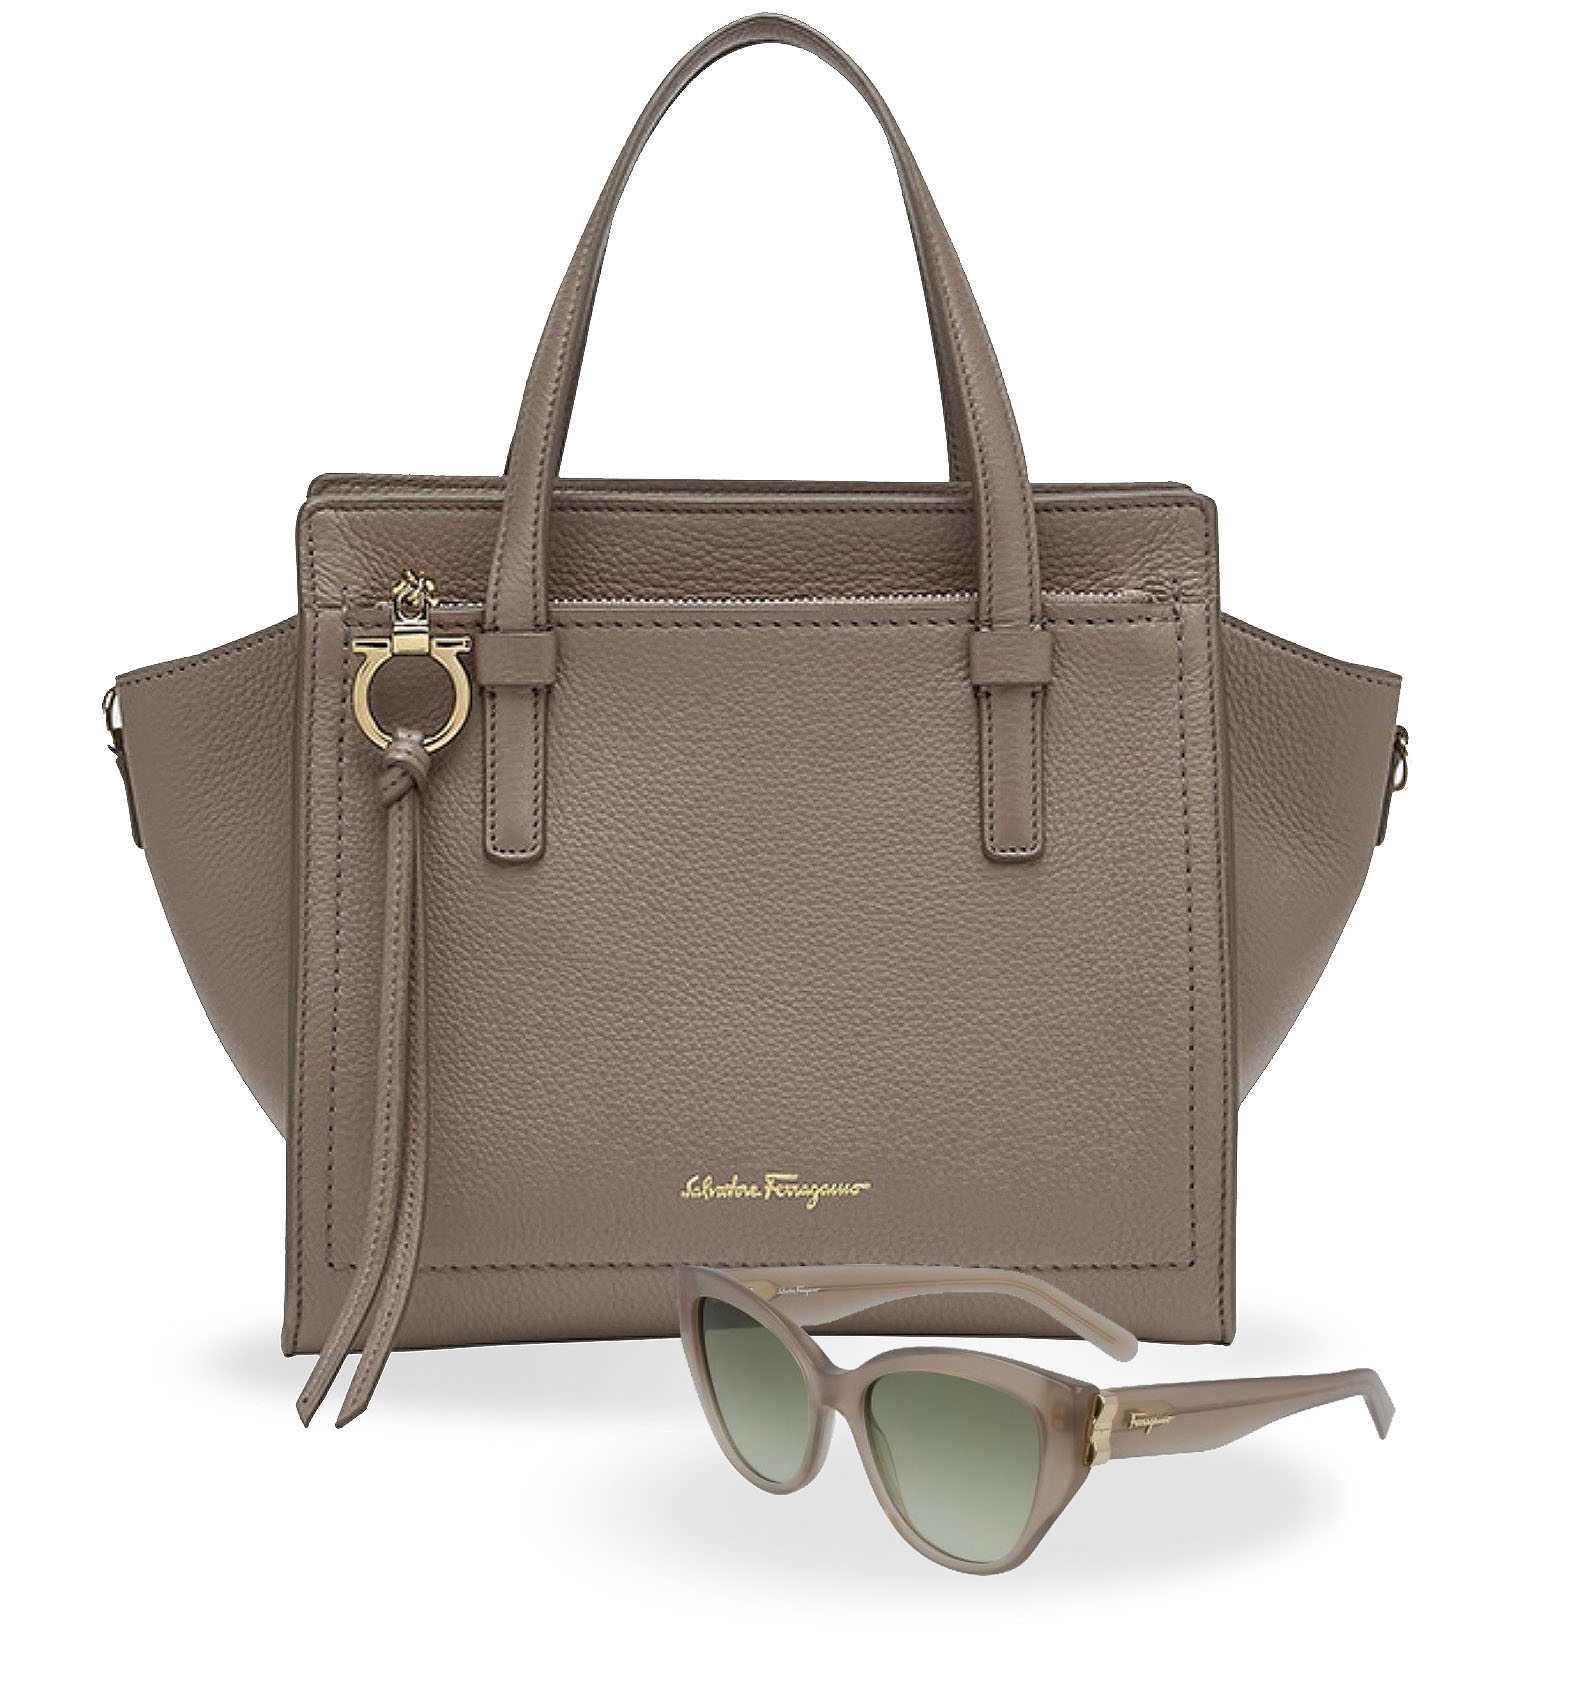 Ferragamo handbag and matching sunglasses